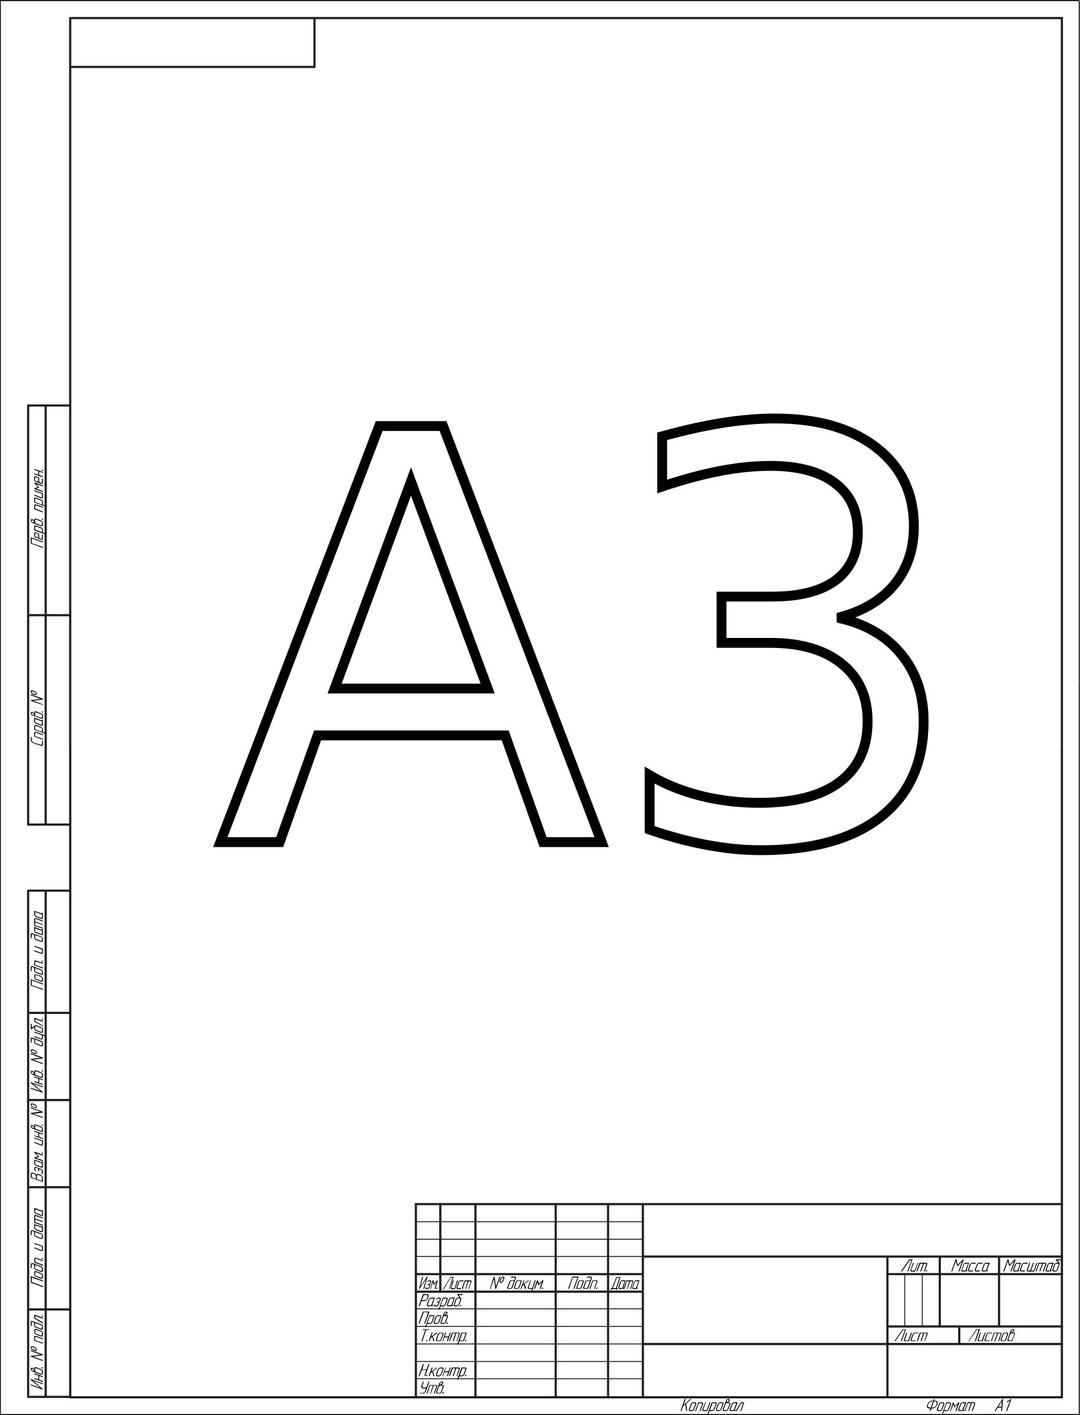 ESKD paper format A3 (vertical) png transparent